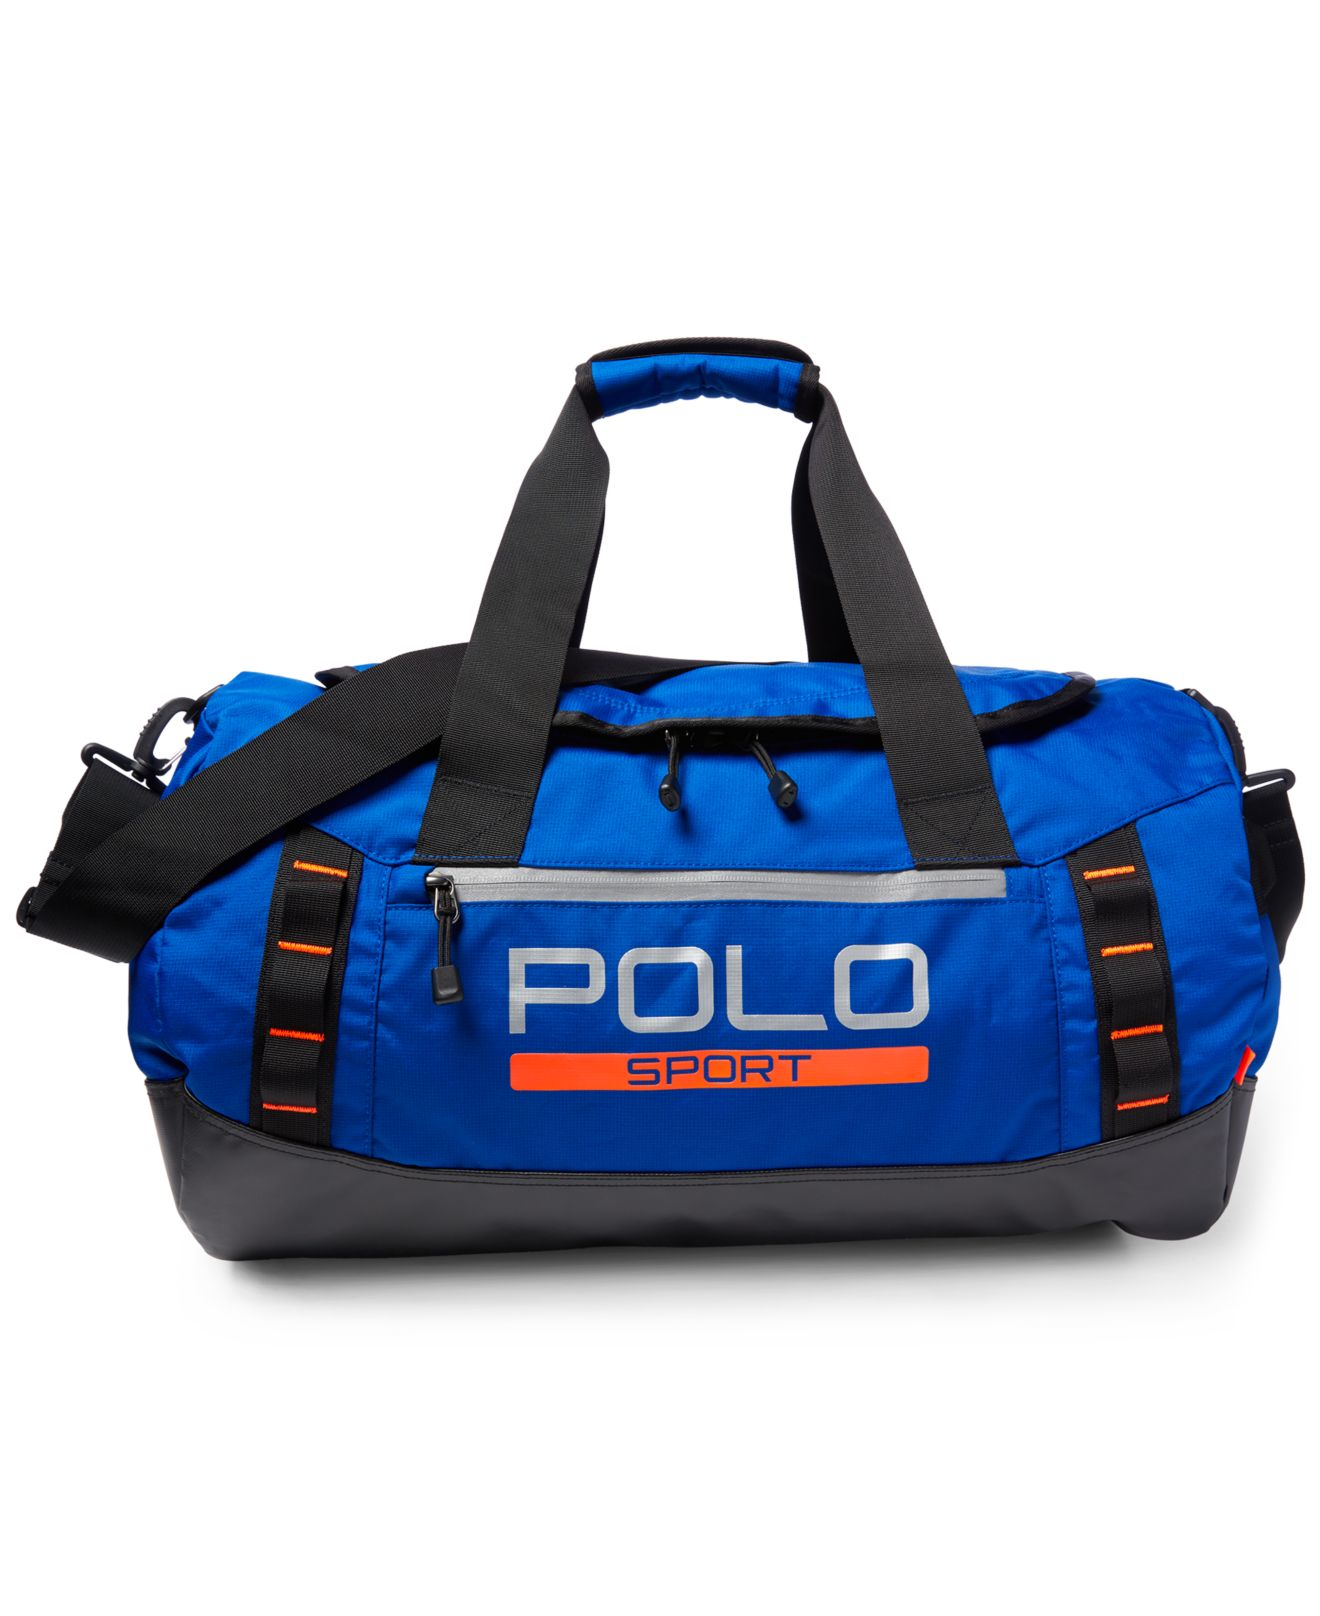 polo sport duffle bag